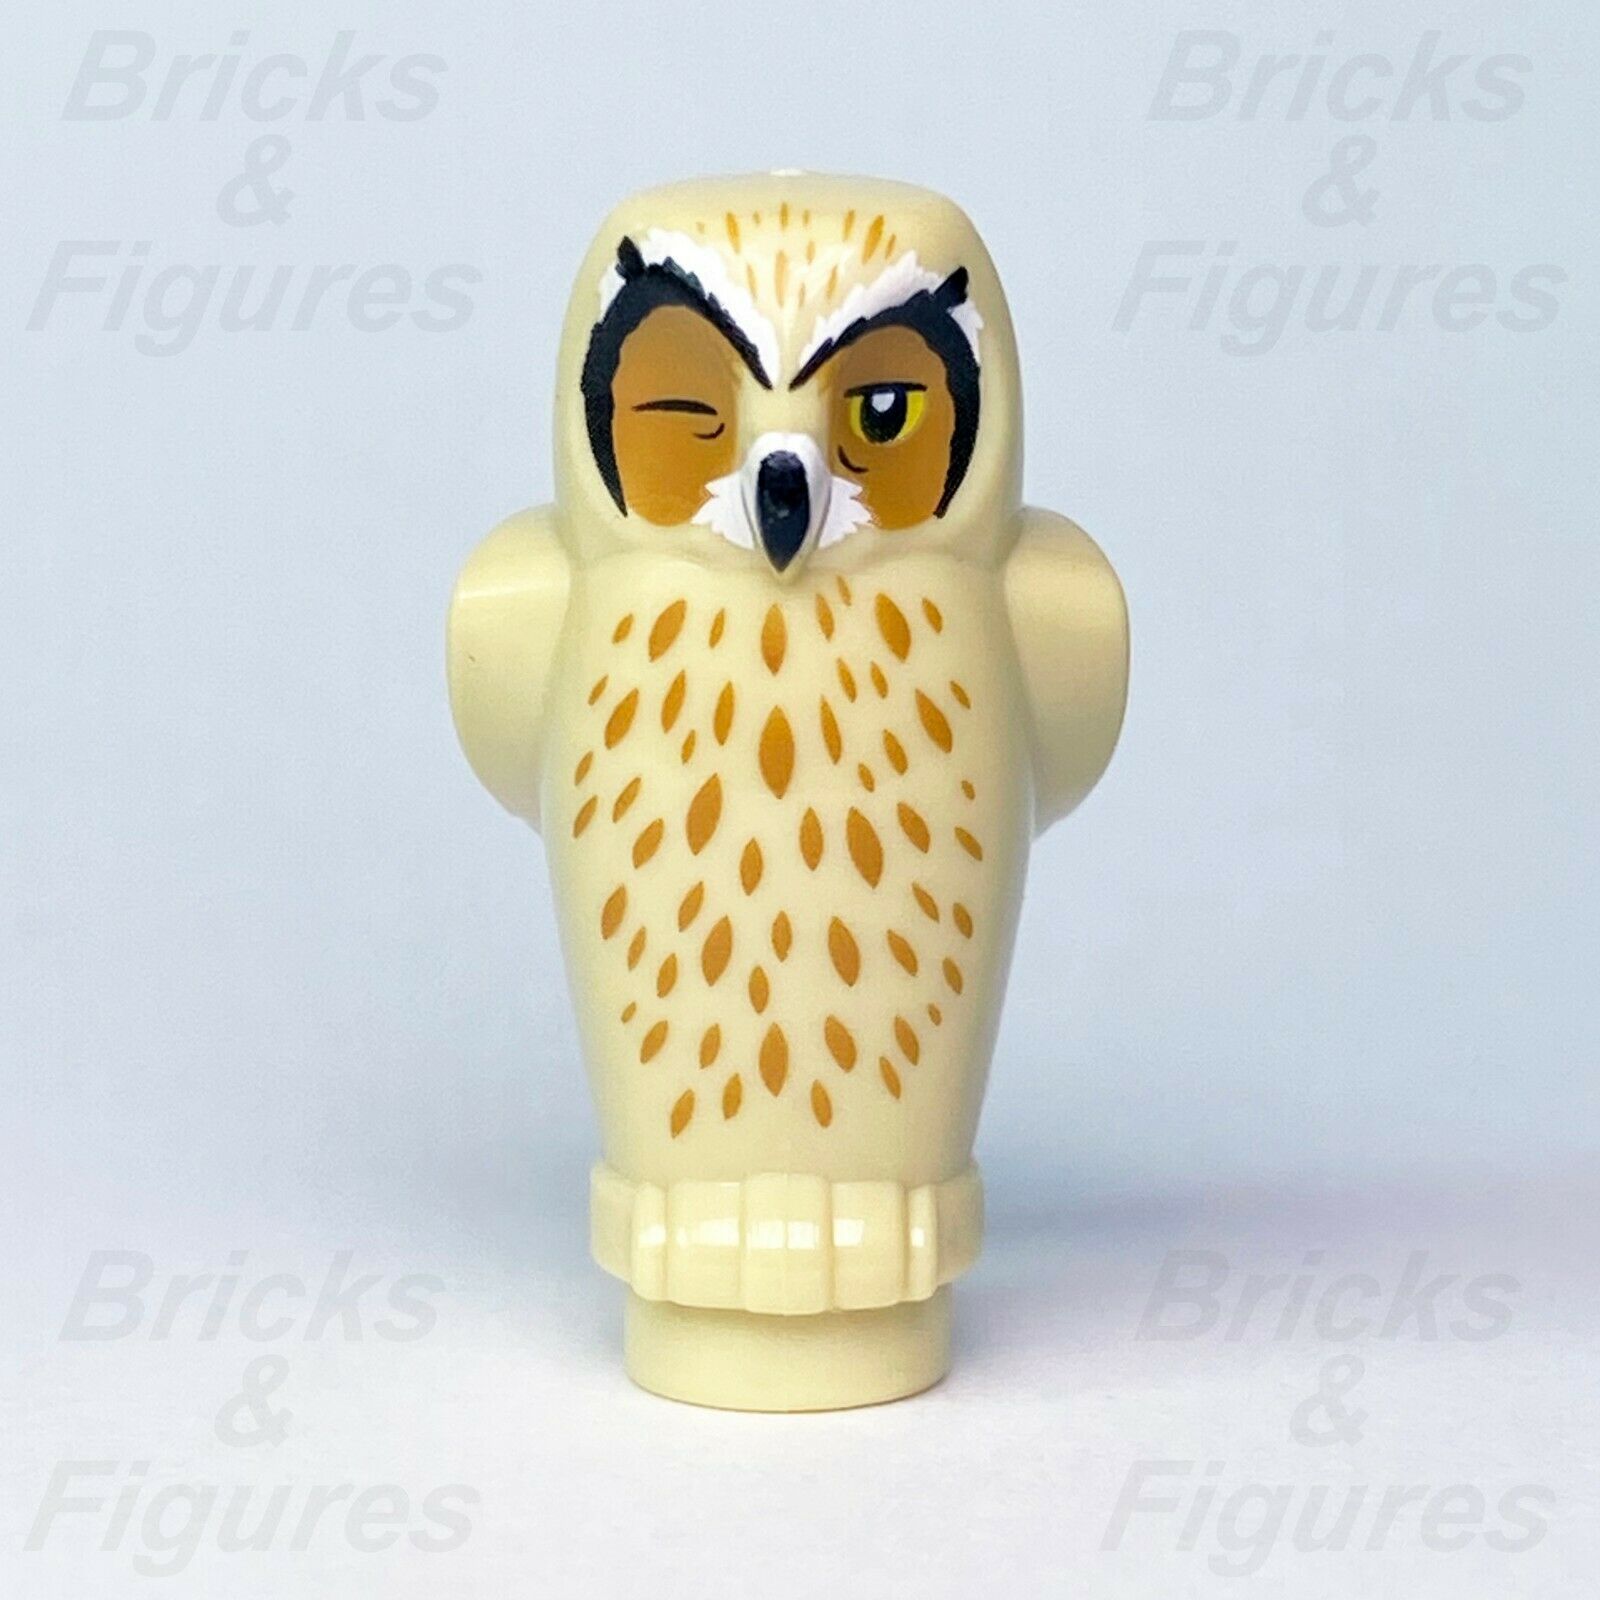 New Harry Potter LEGO Owl with One Eye Closed Bird Animal Part 75978 60247 - Bricks & Figures